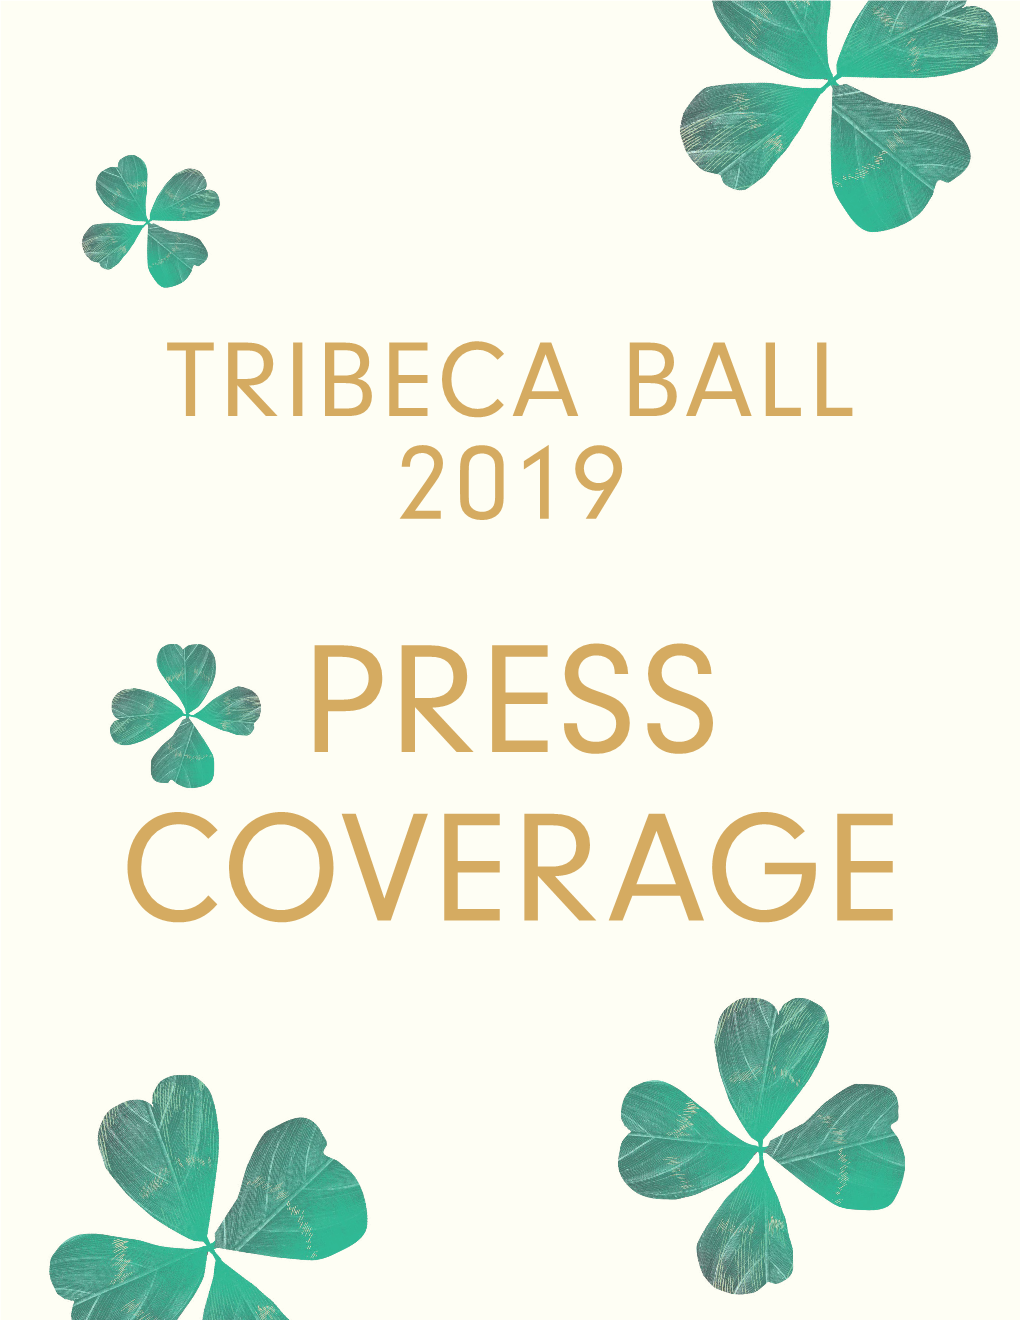 Tribeca Ball 2019